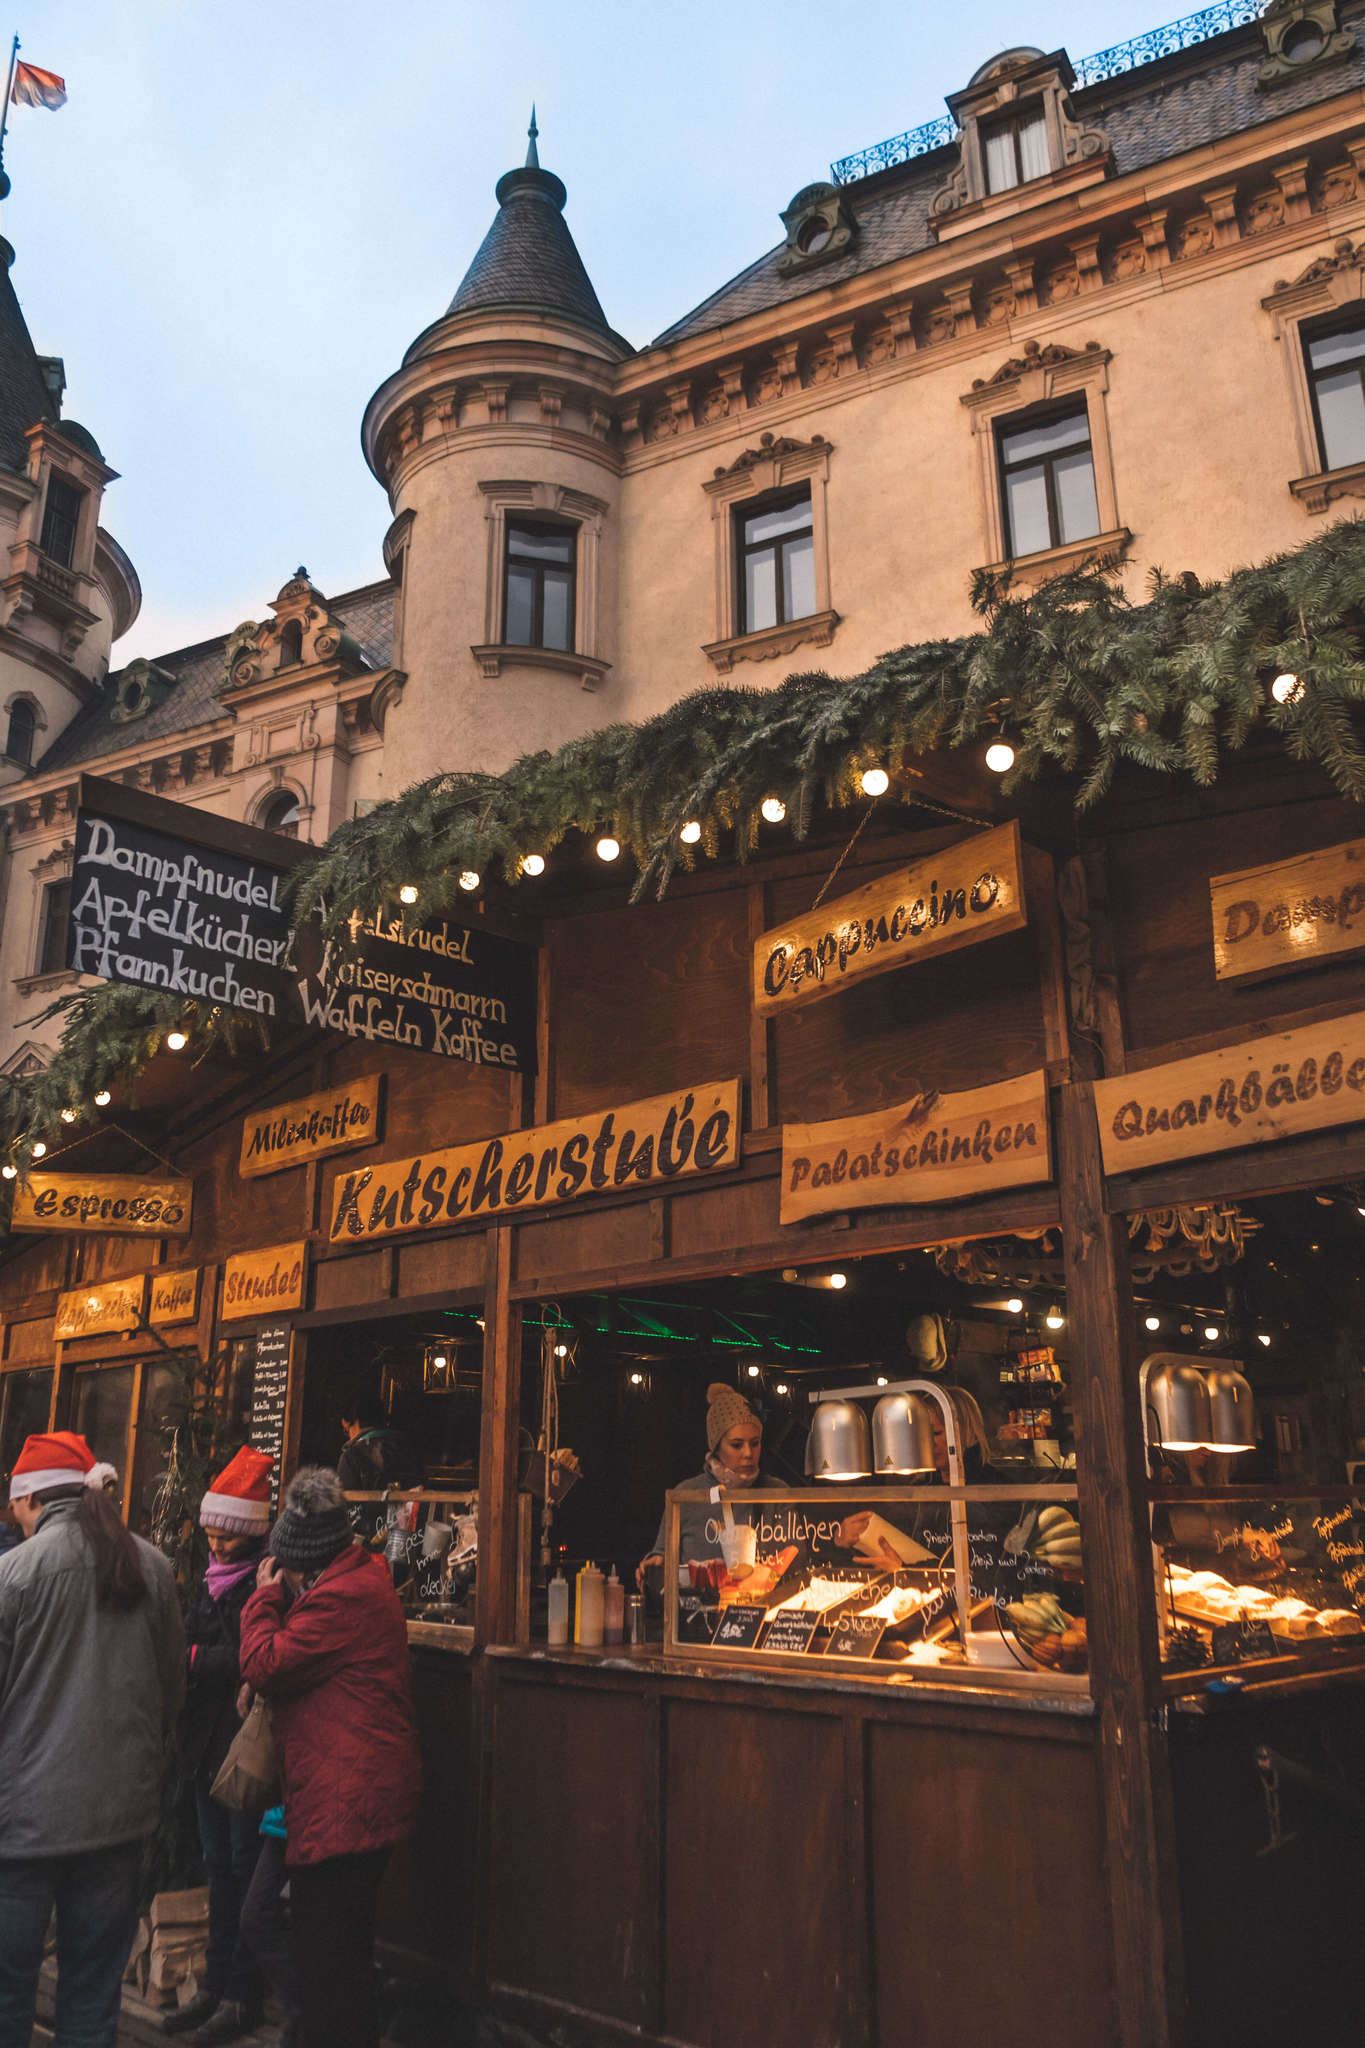 Christmas Market stand in Regensburg, Germany